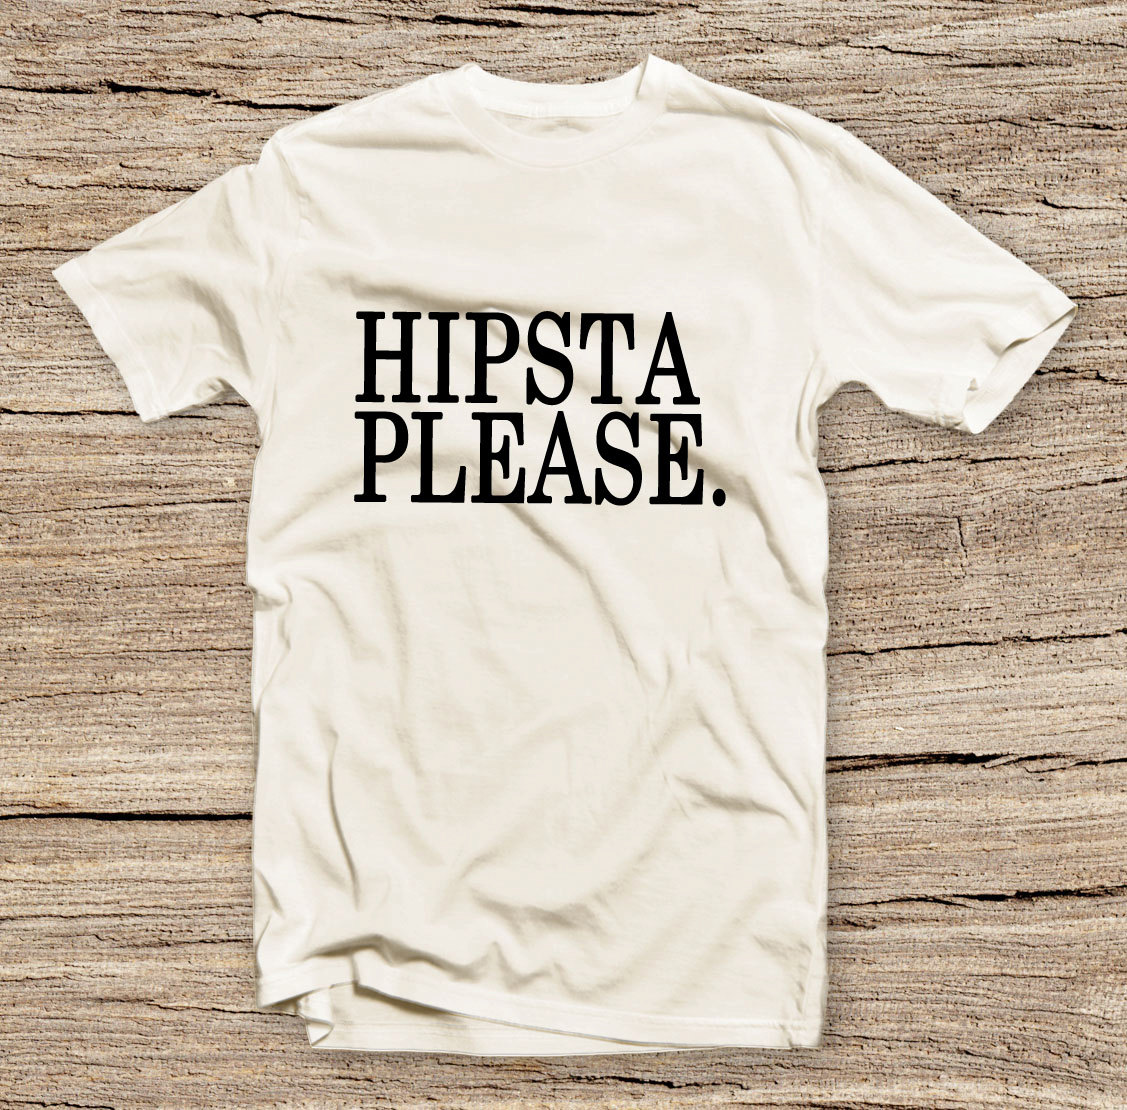 Pts-109 Hipsta Please Funny T-shirt Fashion Item, Style T-shirt, Fashion Printed T-shirt